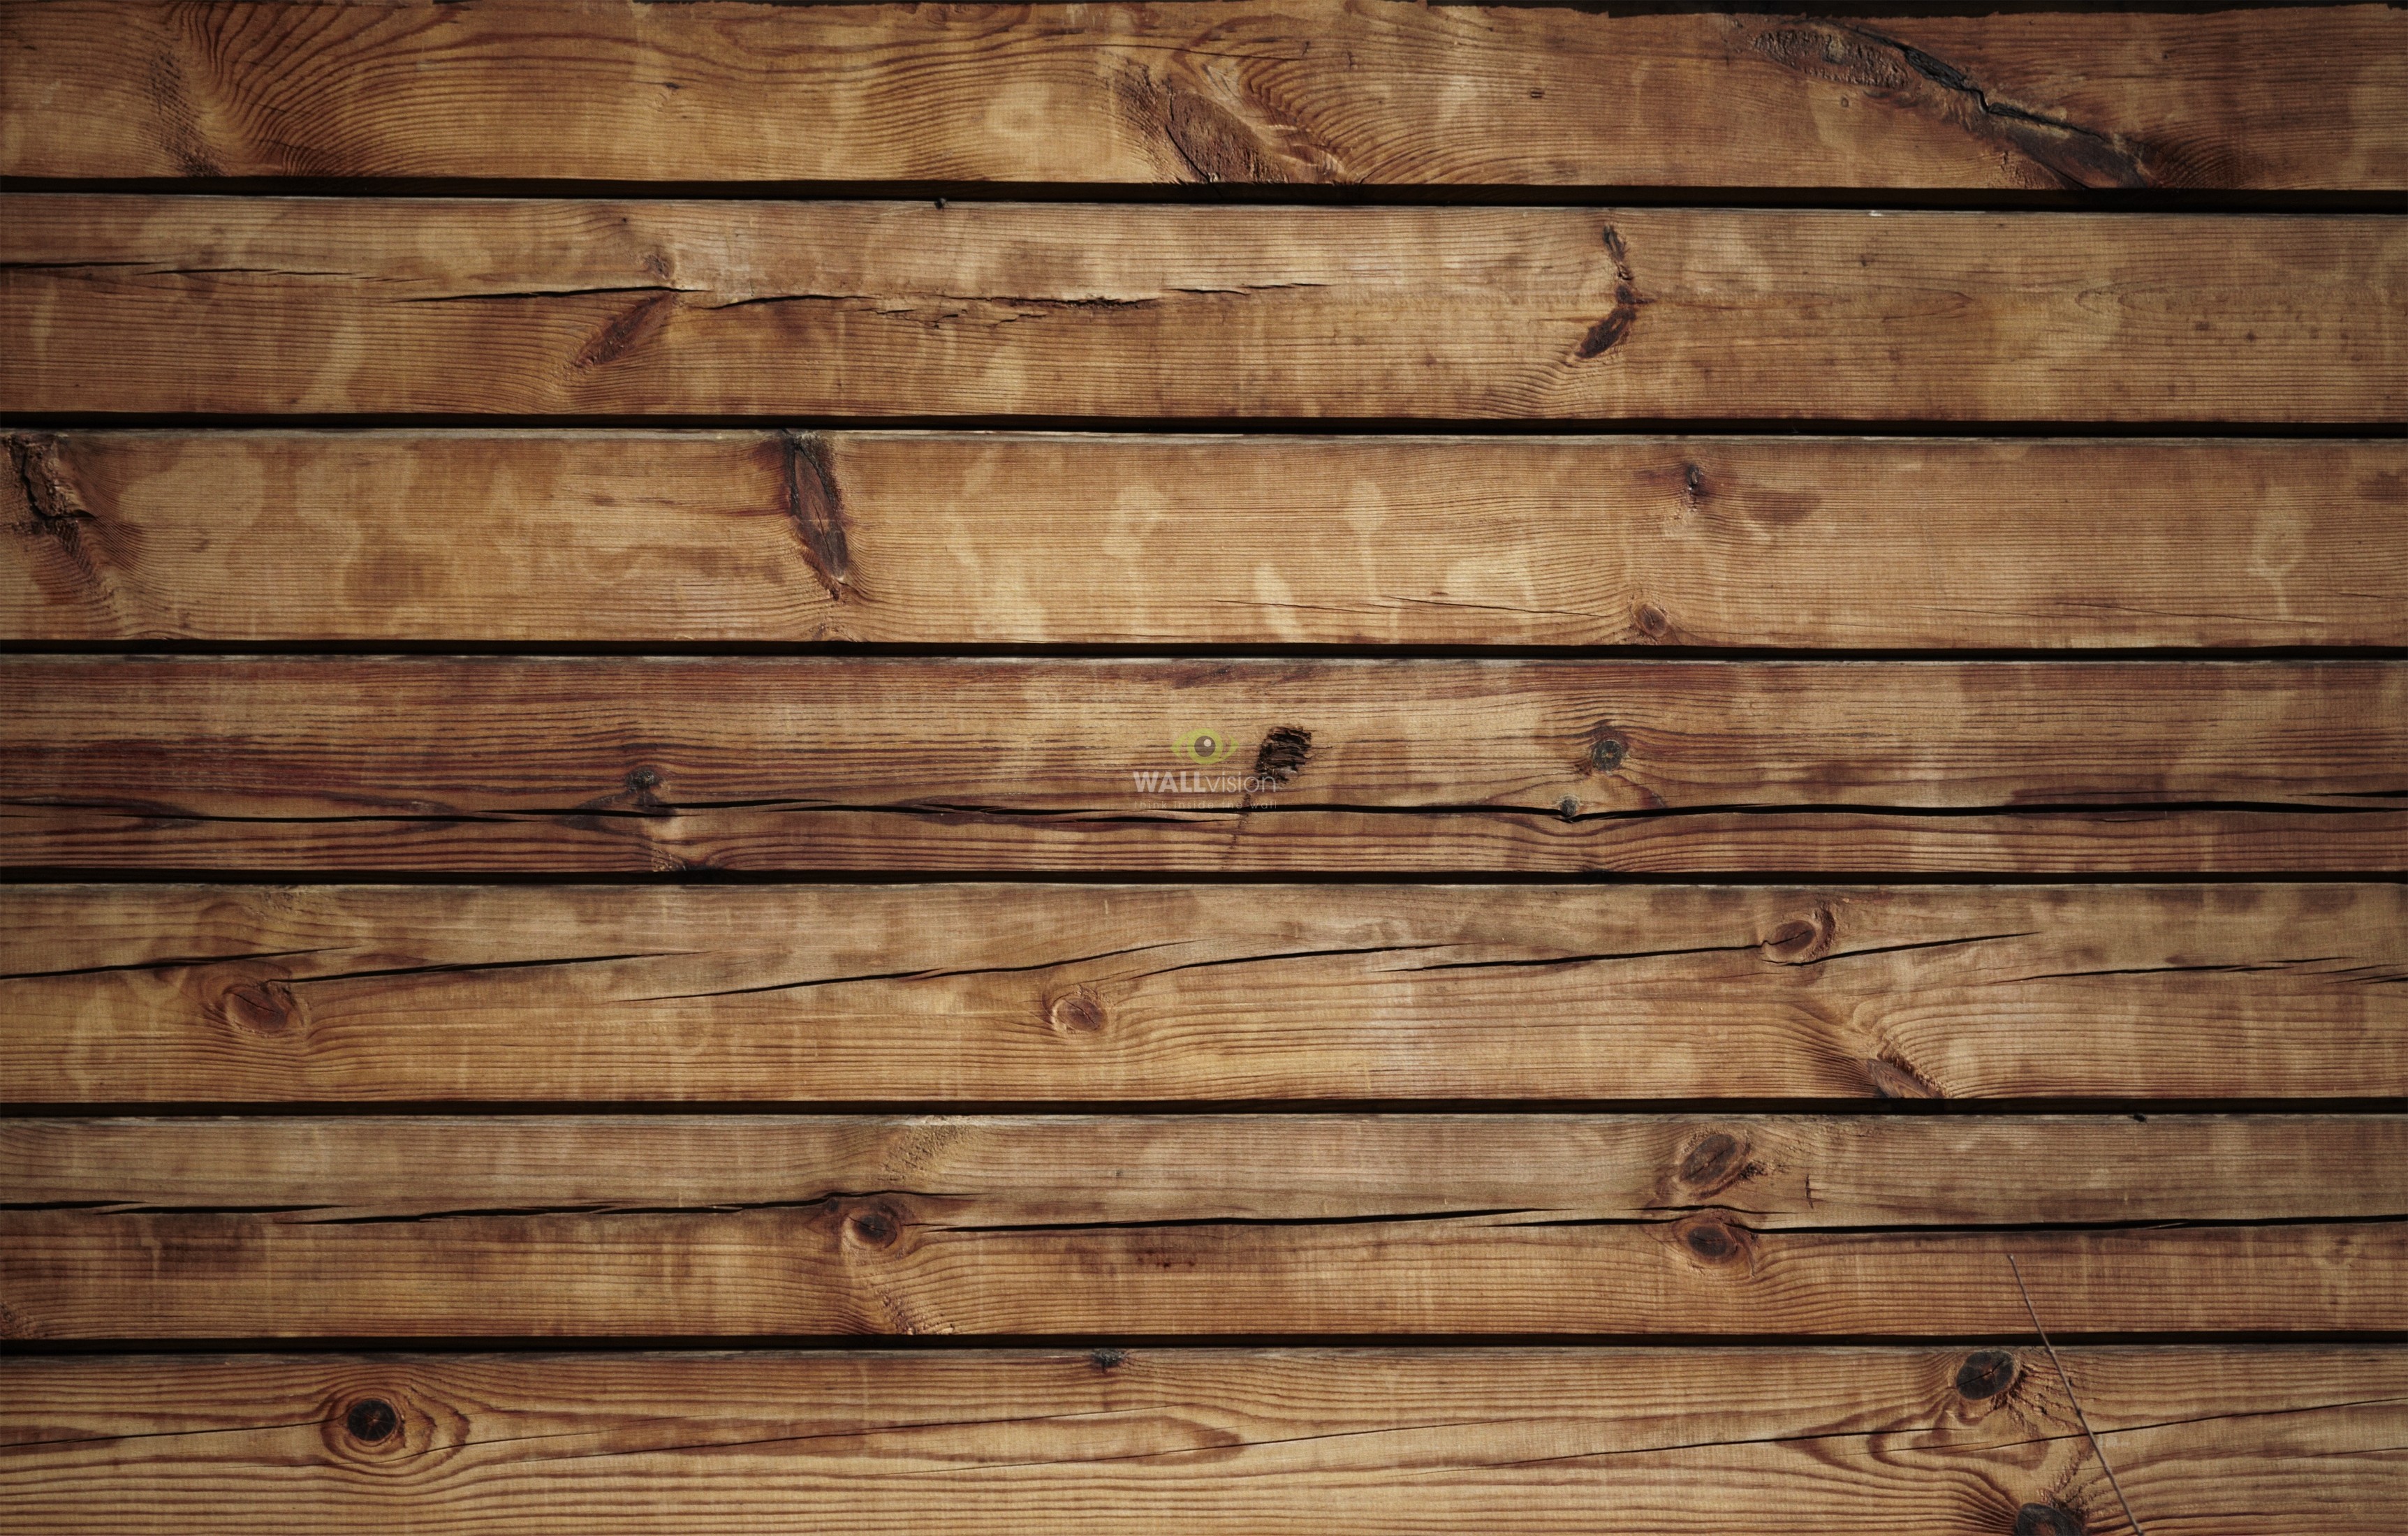 General 3448x2200 wood wall watermarked wood panels wooden surface minimalism closeup